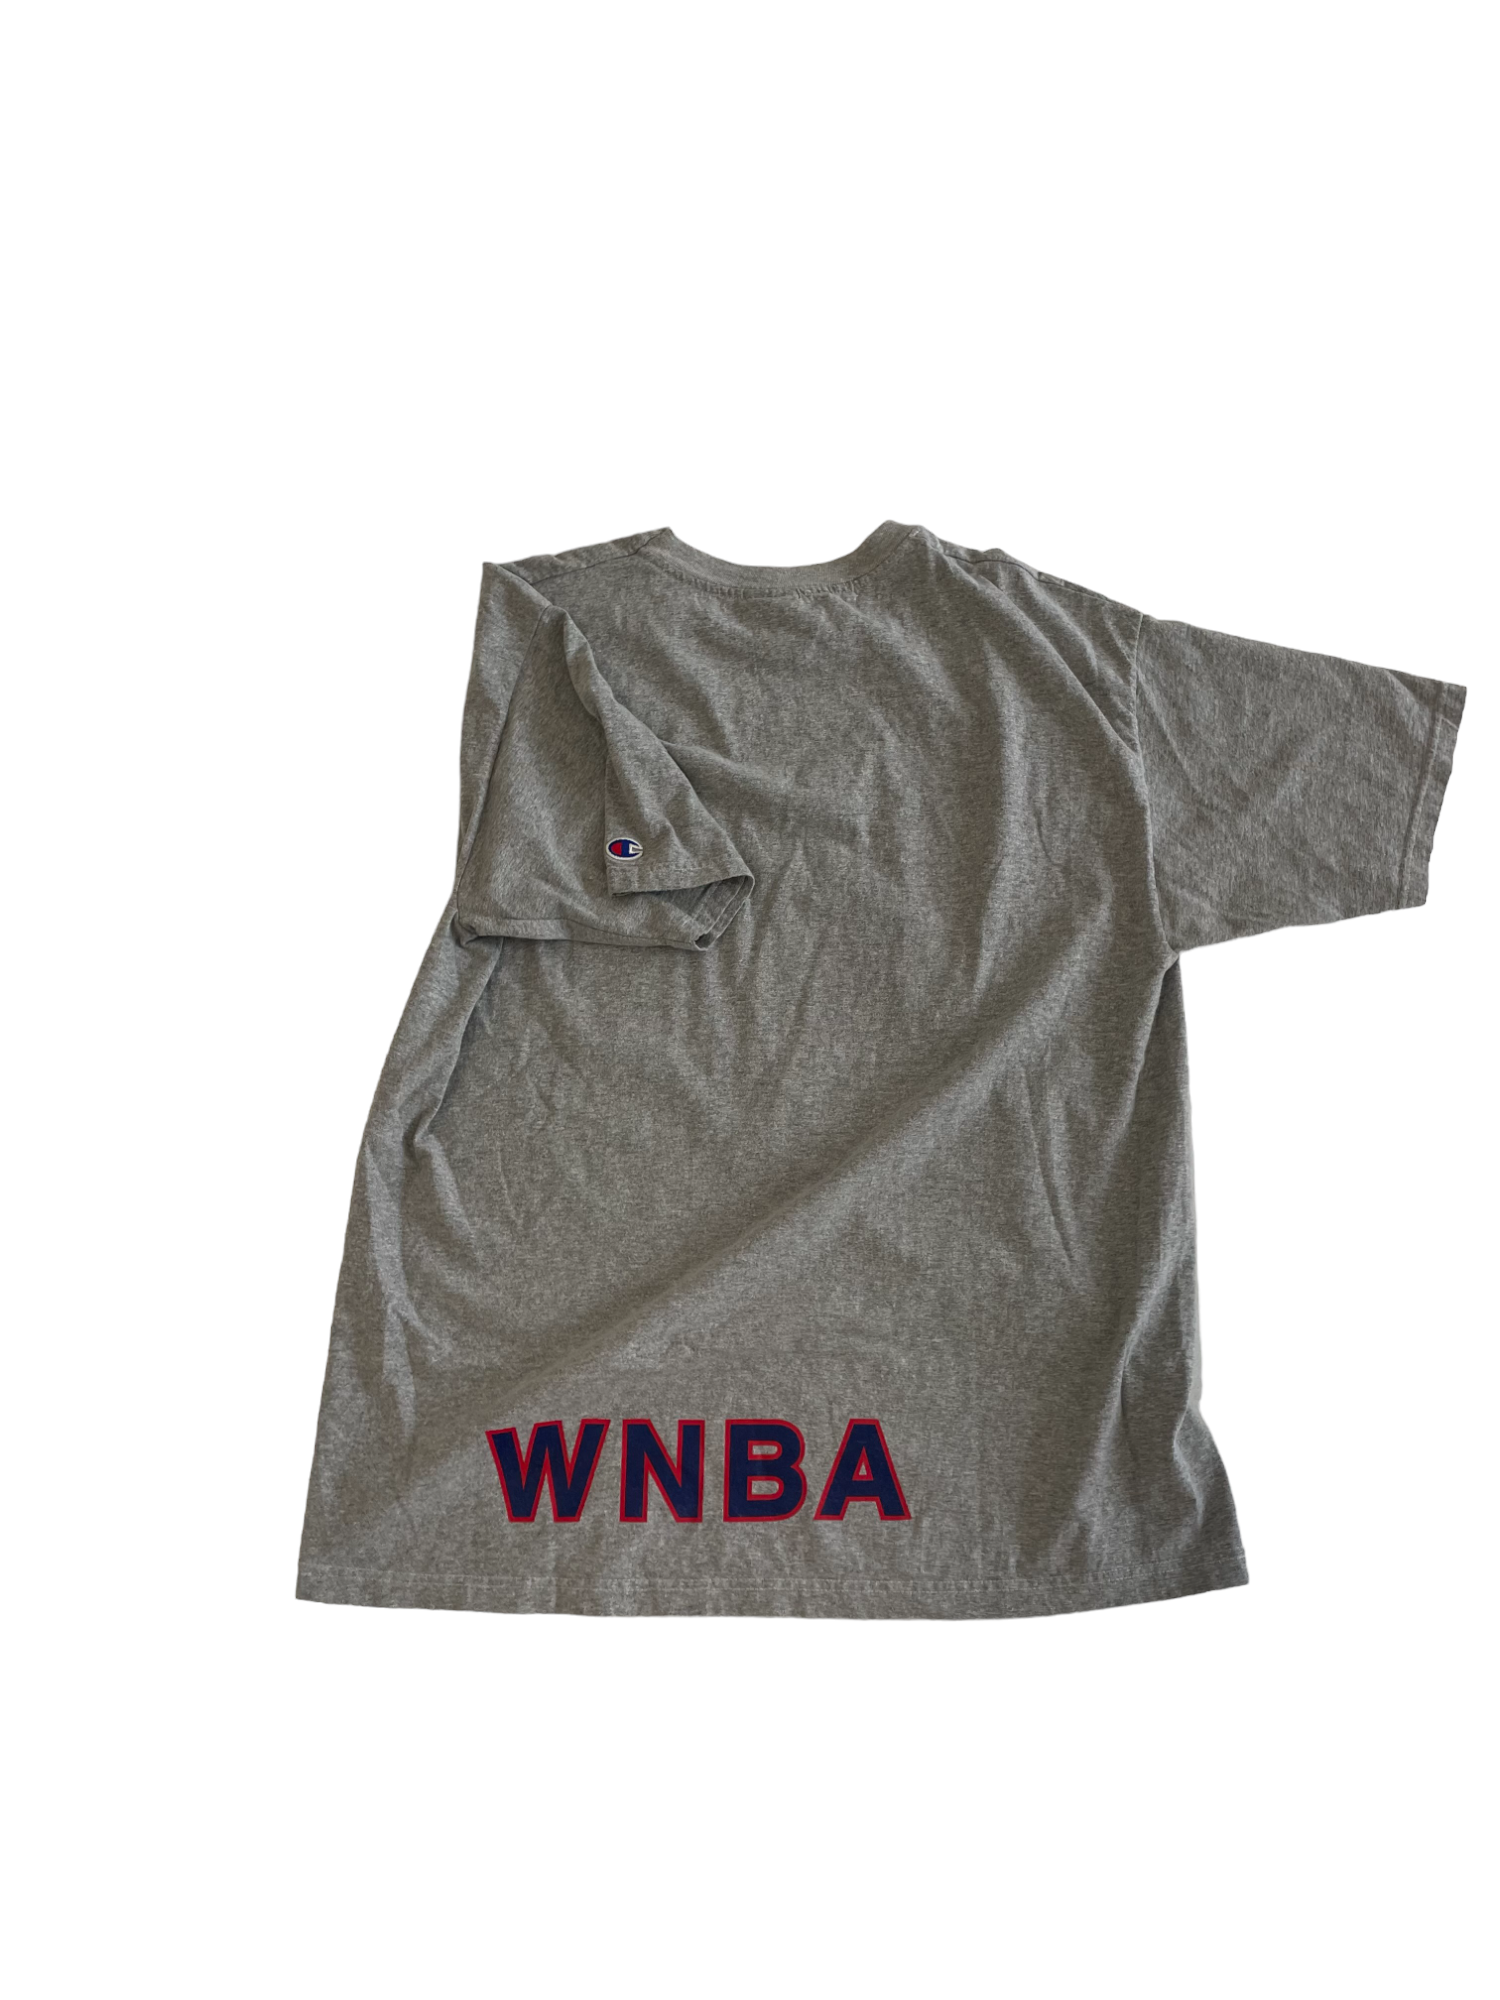 Vintage 'Your Turn Girlfriend' WNBA T-shirt